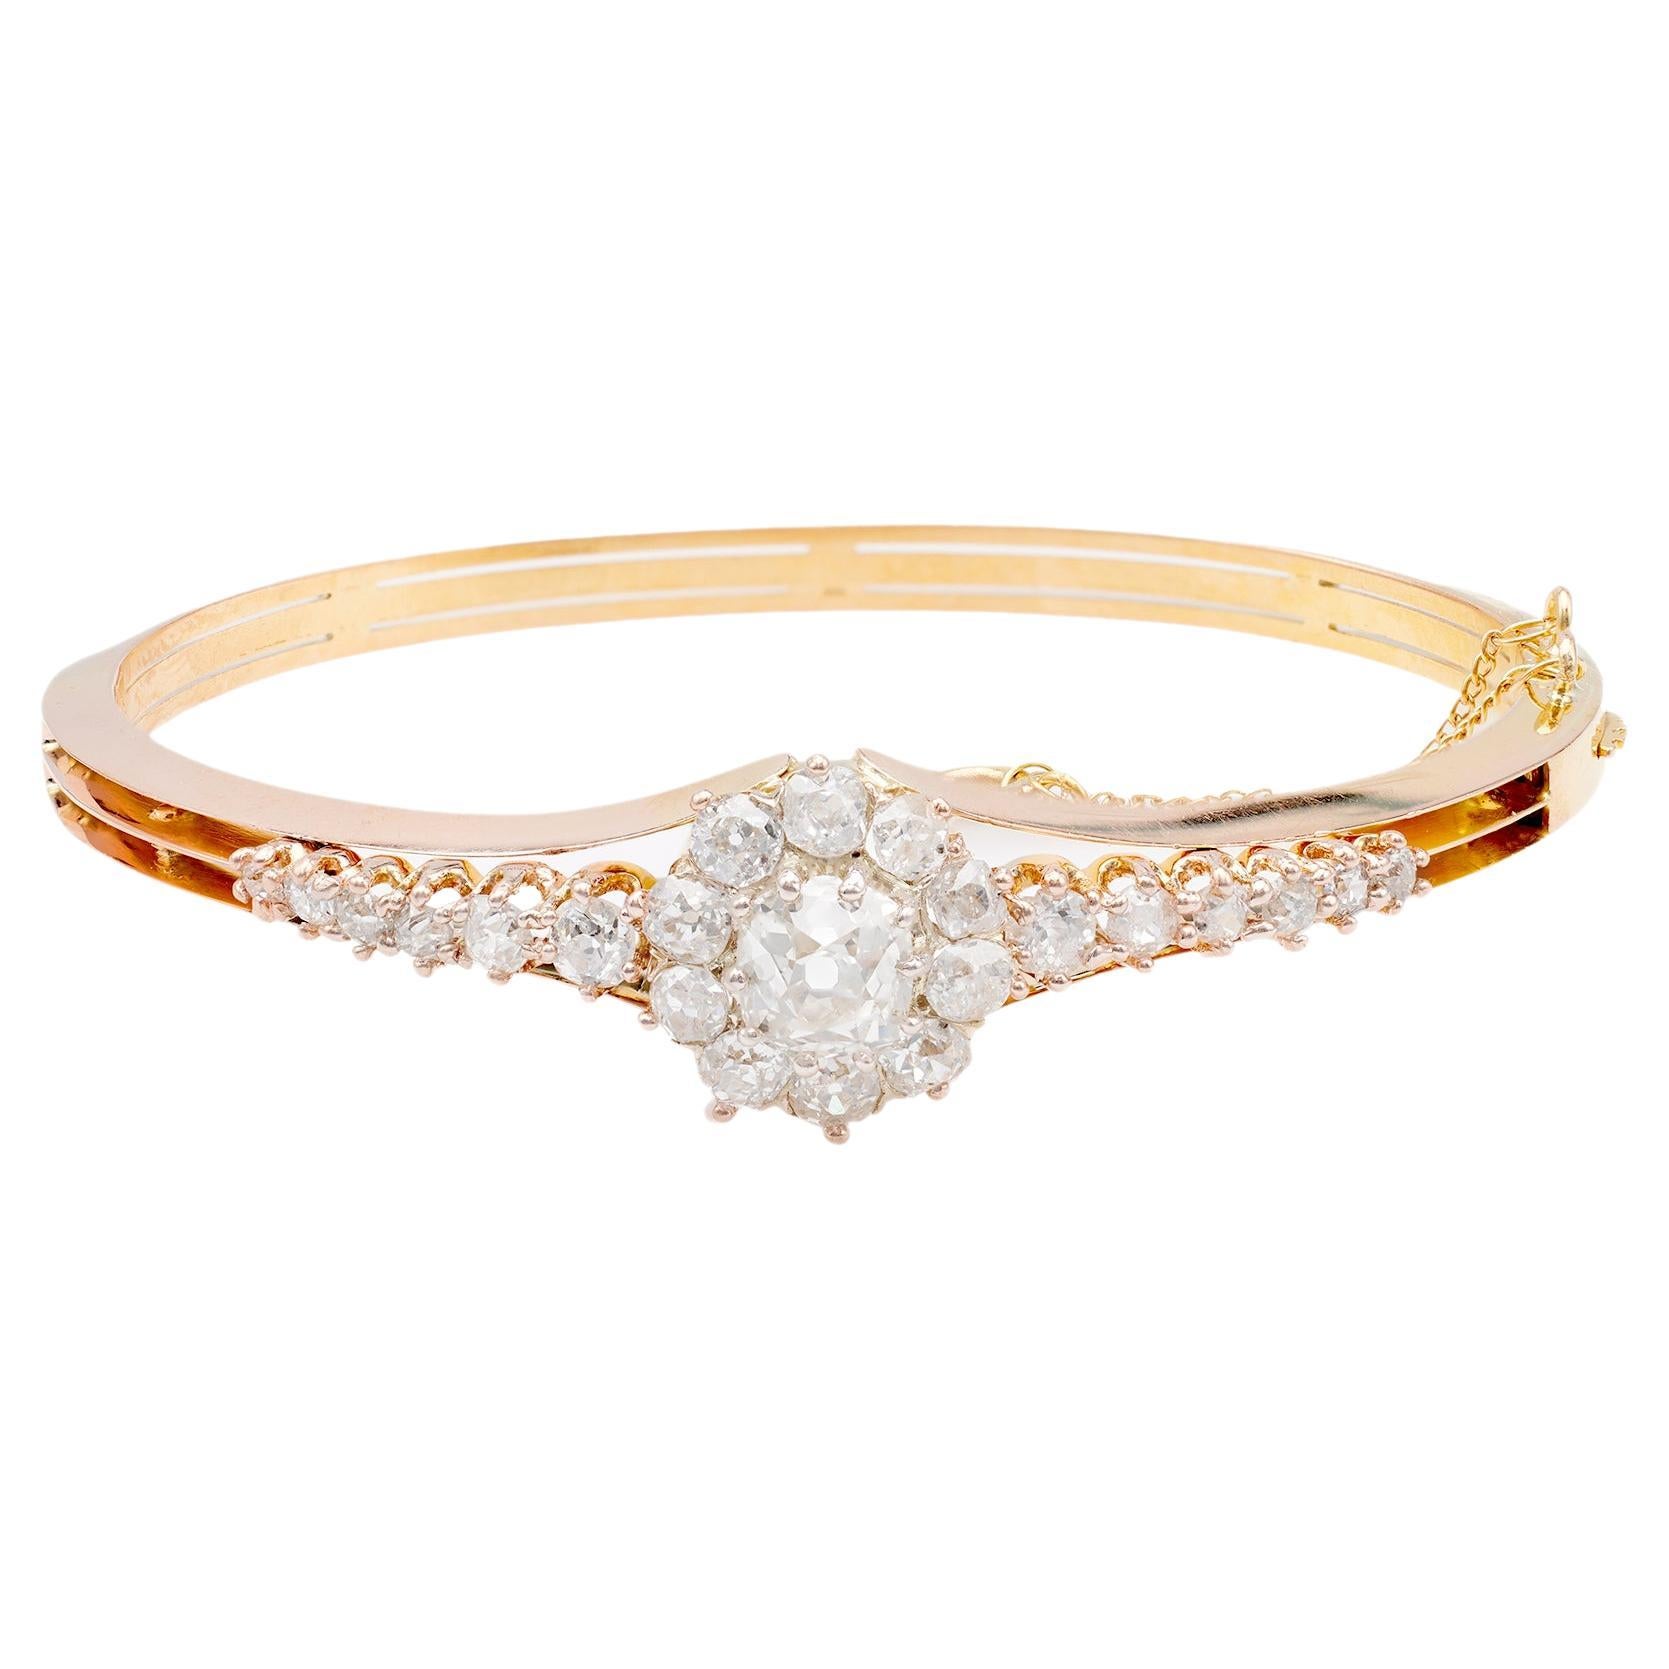 Antique French Diamond 18k Rose Gold Bangle Bracelet